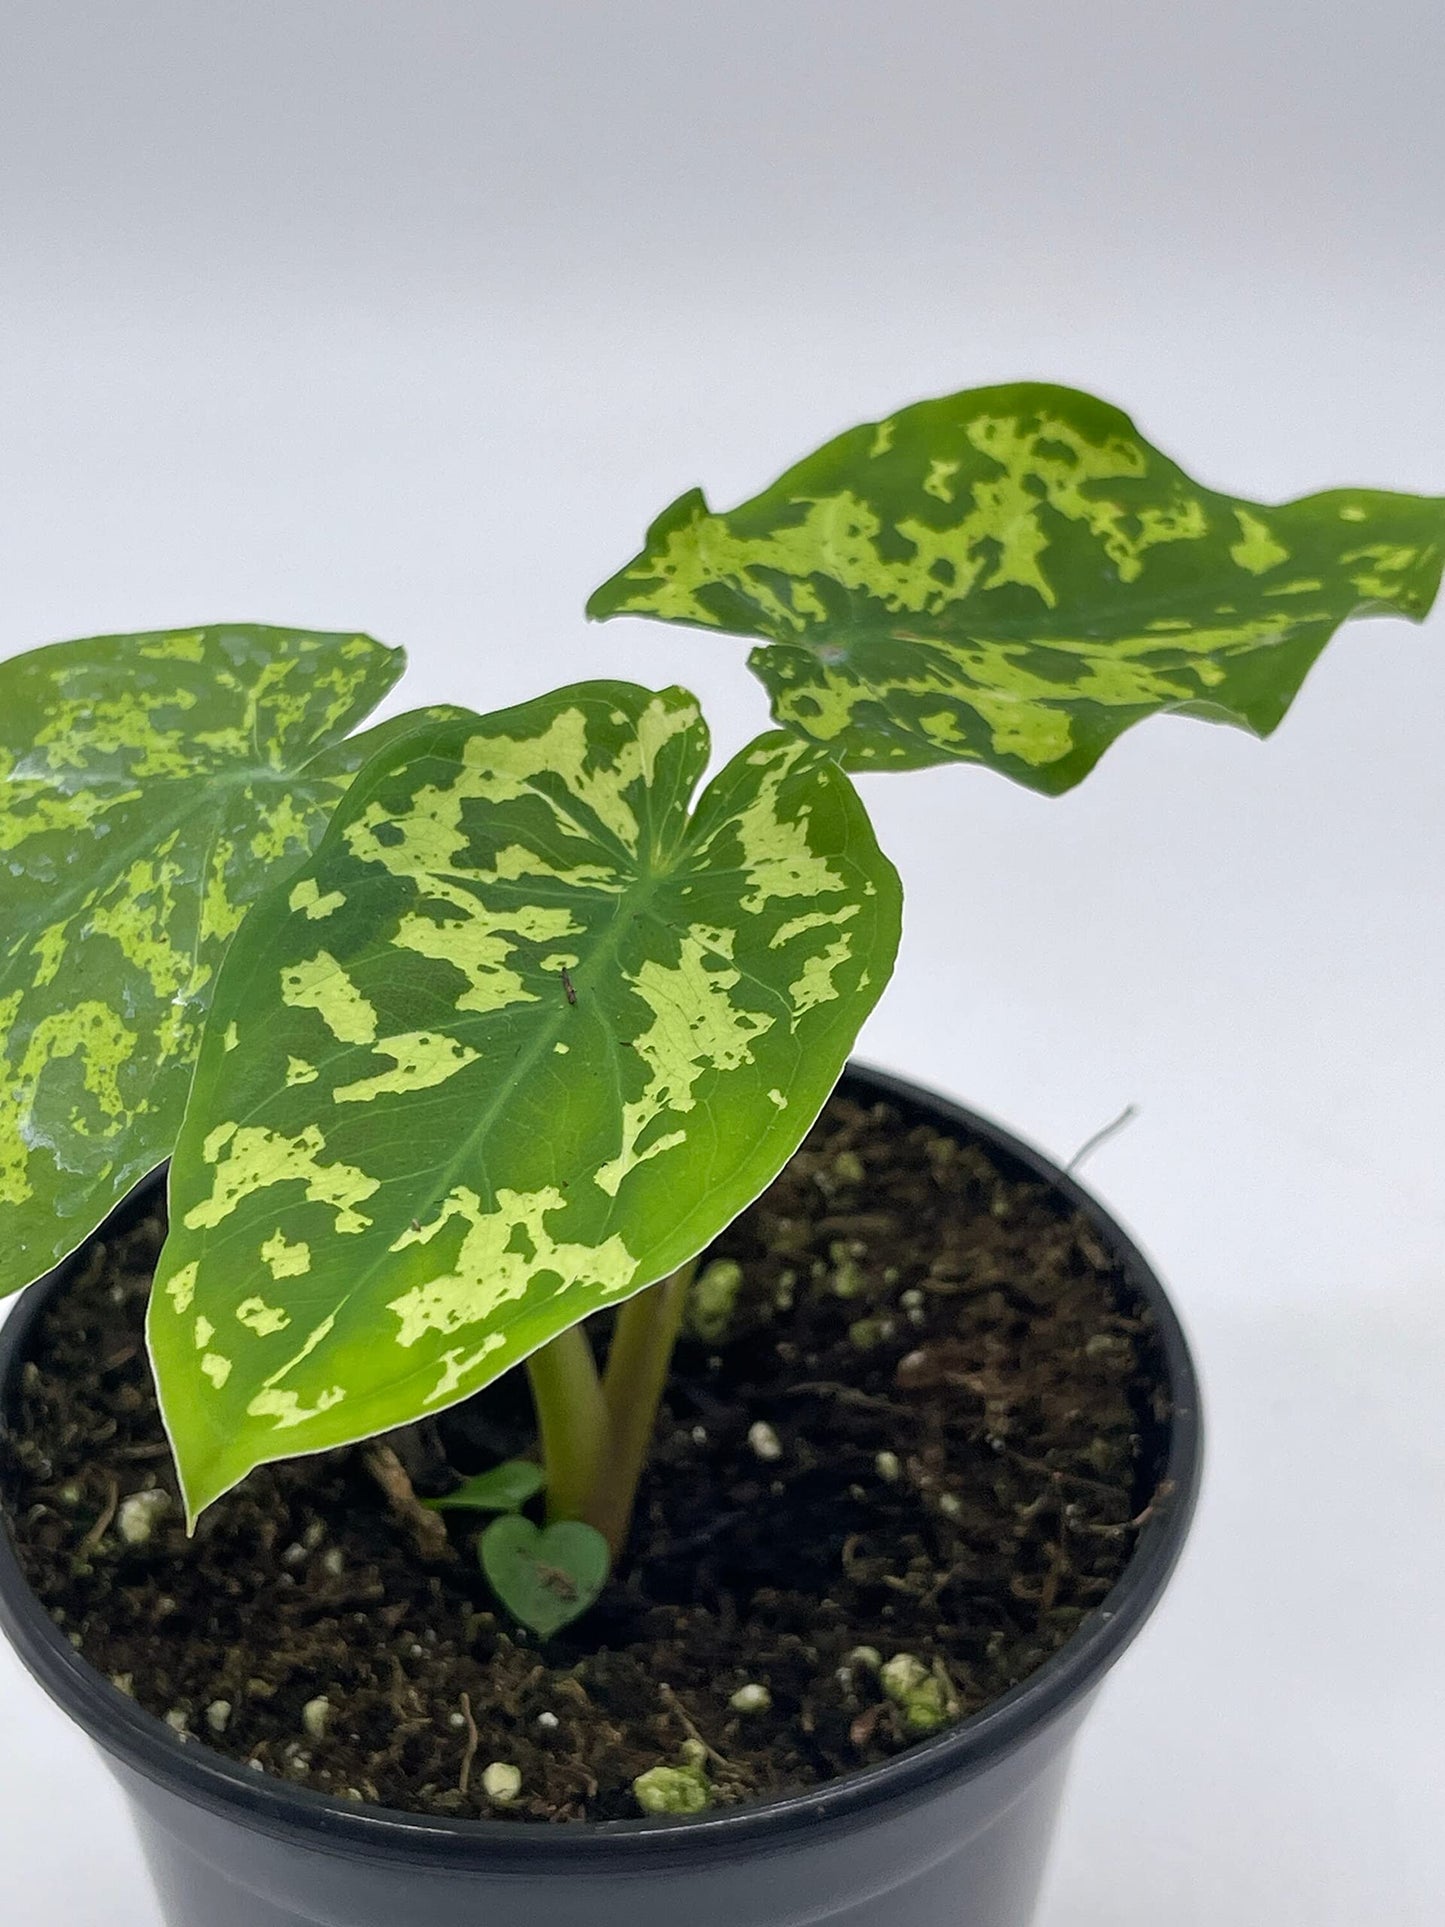 Alocasia 'Hilo Beauty', Caladium Praetermissum, 4 inch Pot, Green and White Alocasia, Elephant Ear